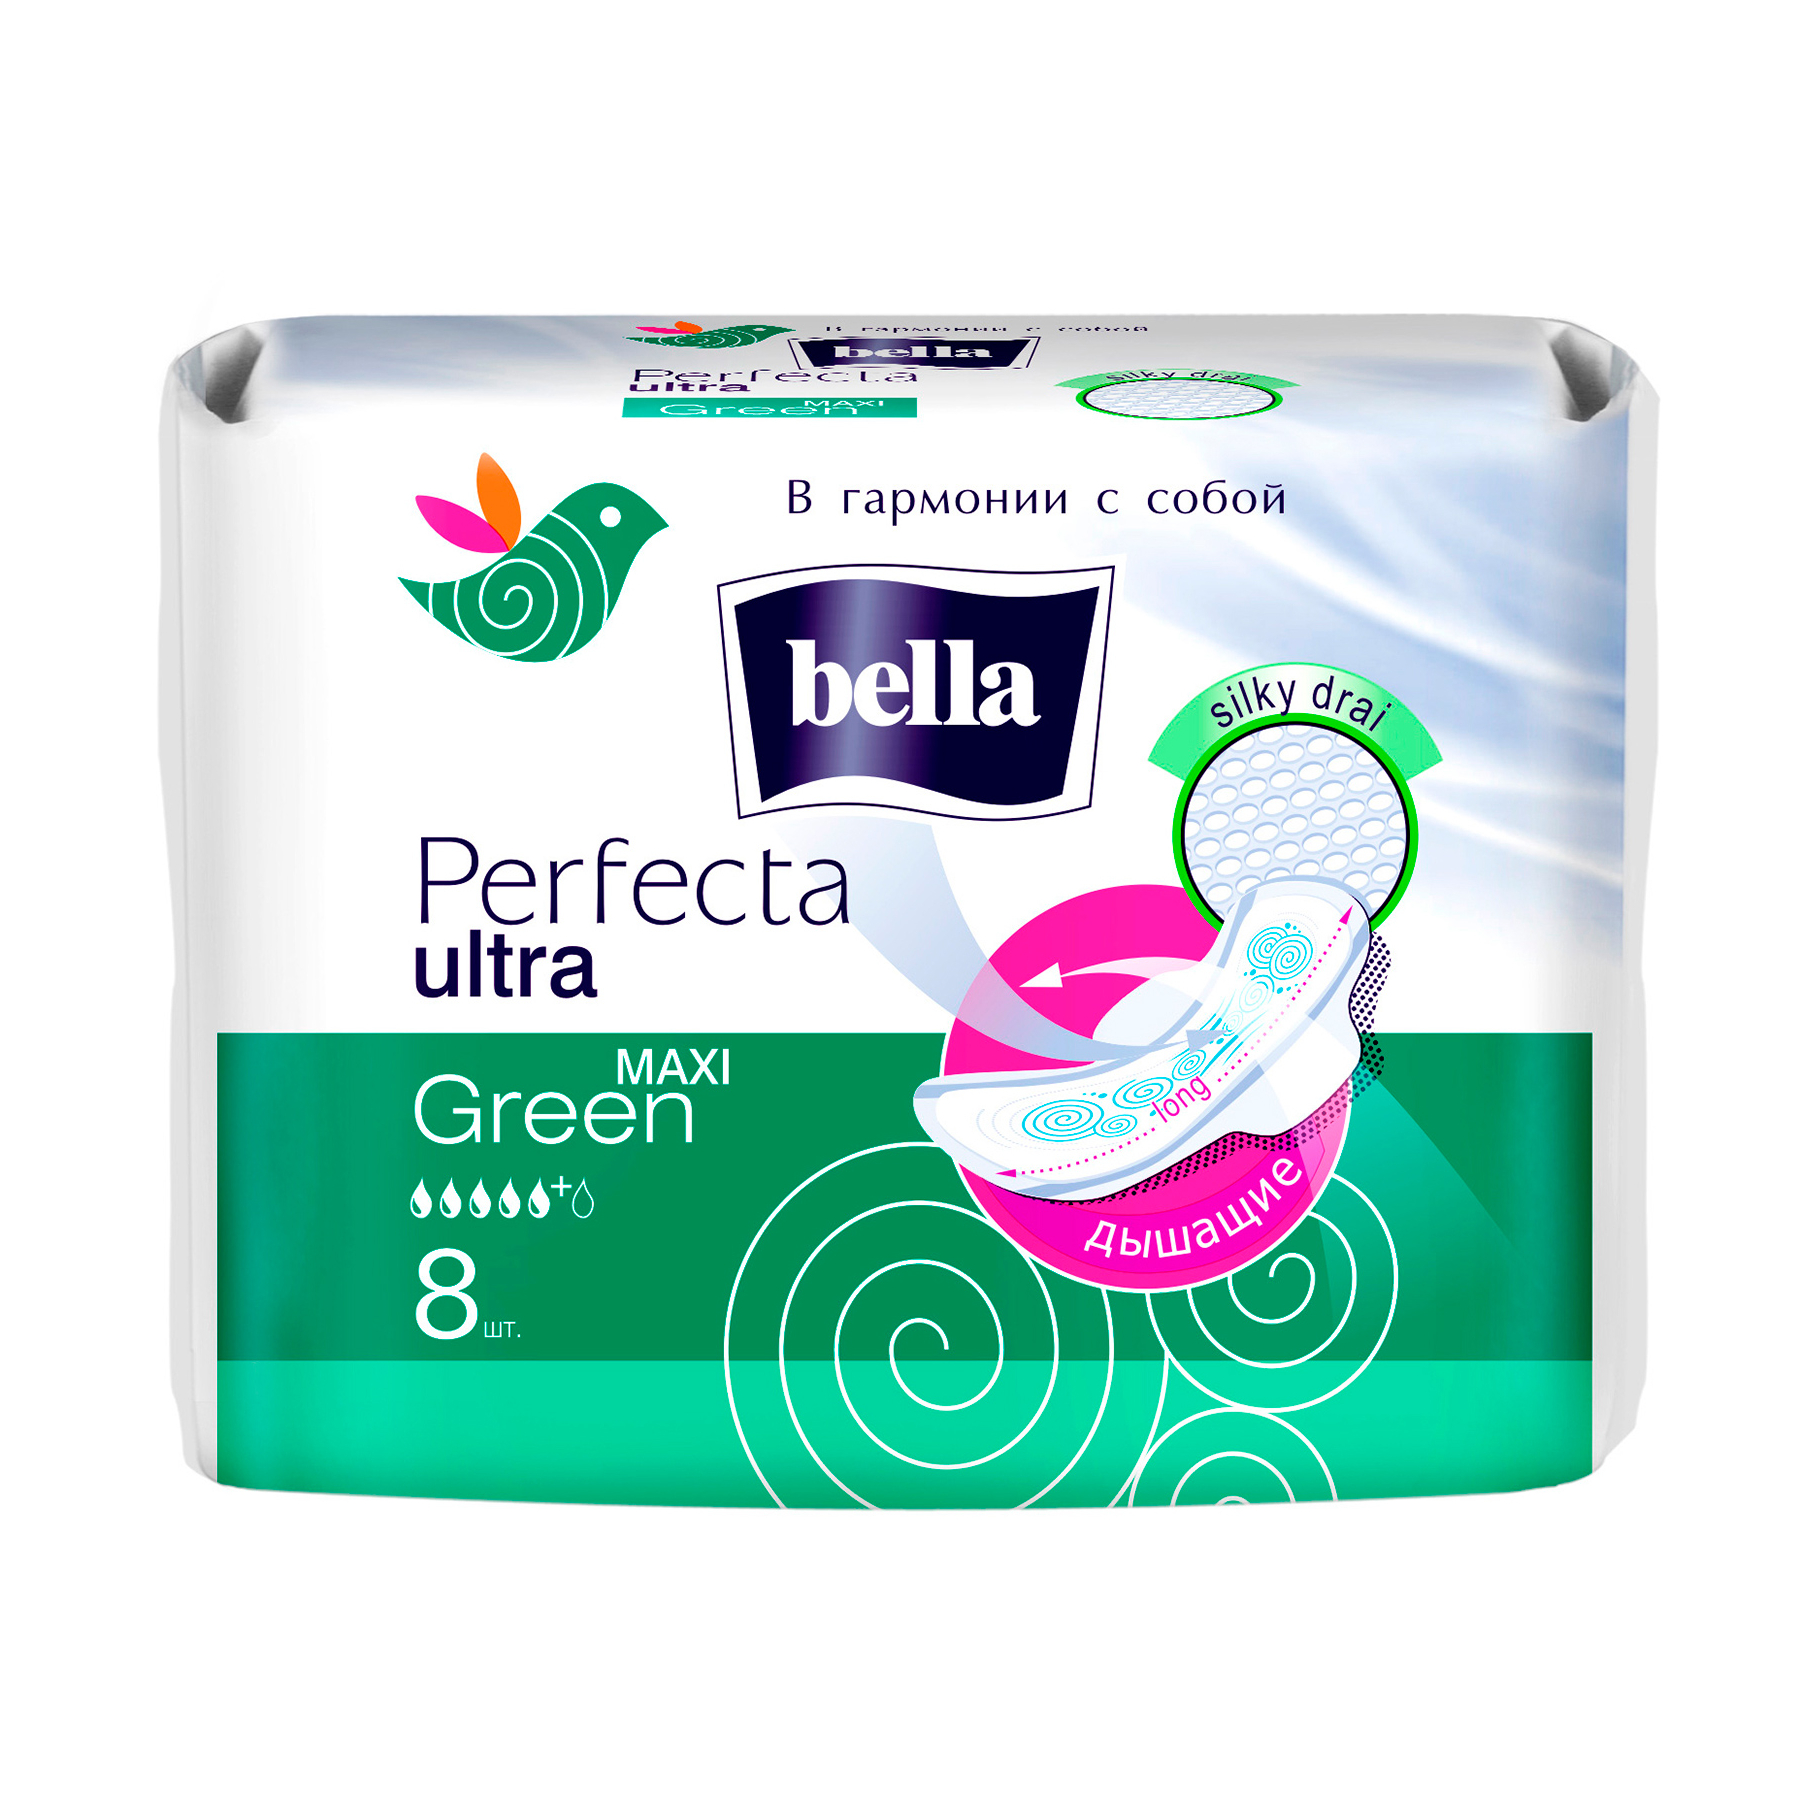 Прокладки Bella Perfecta Ultra Maxi Green, супертонкие, 8 шт